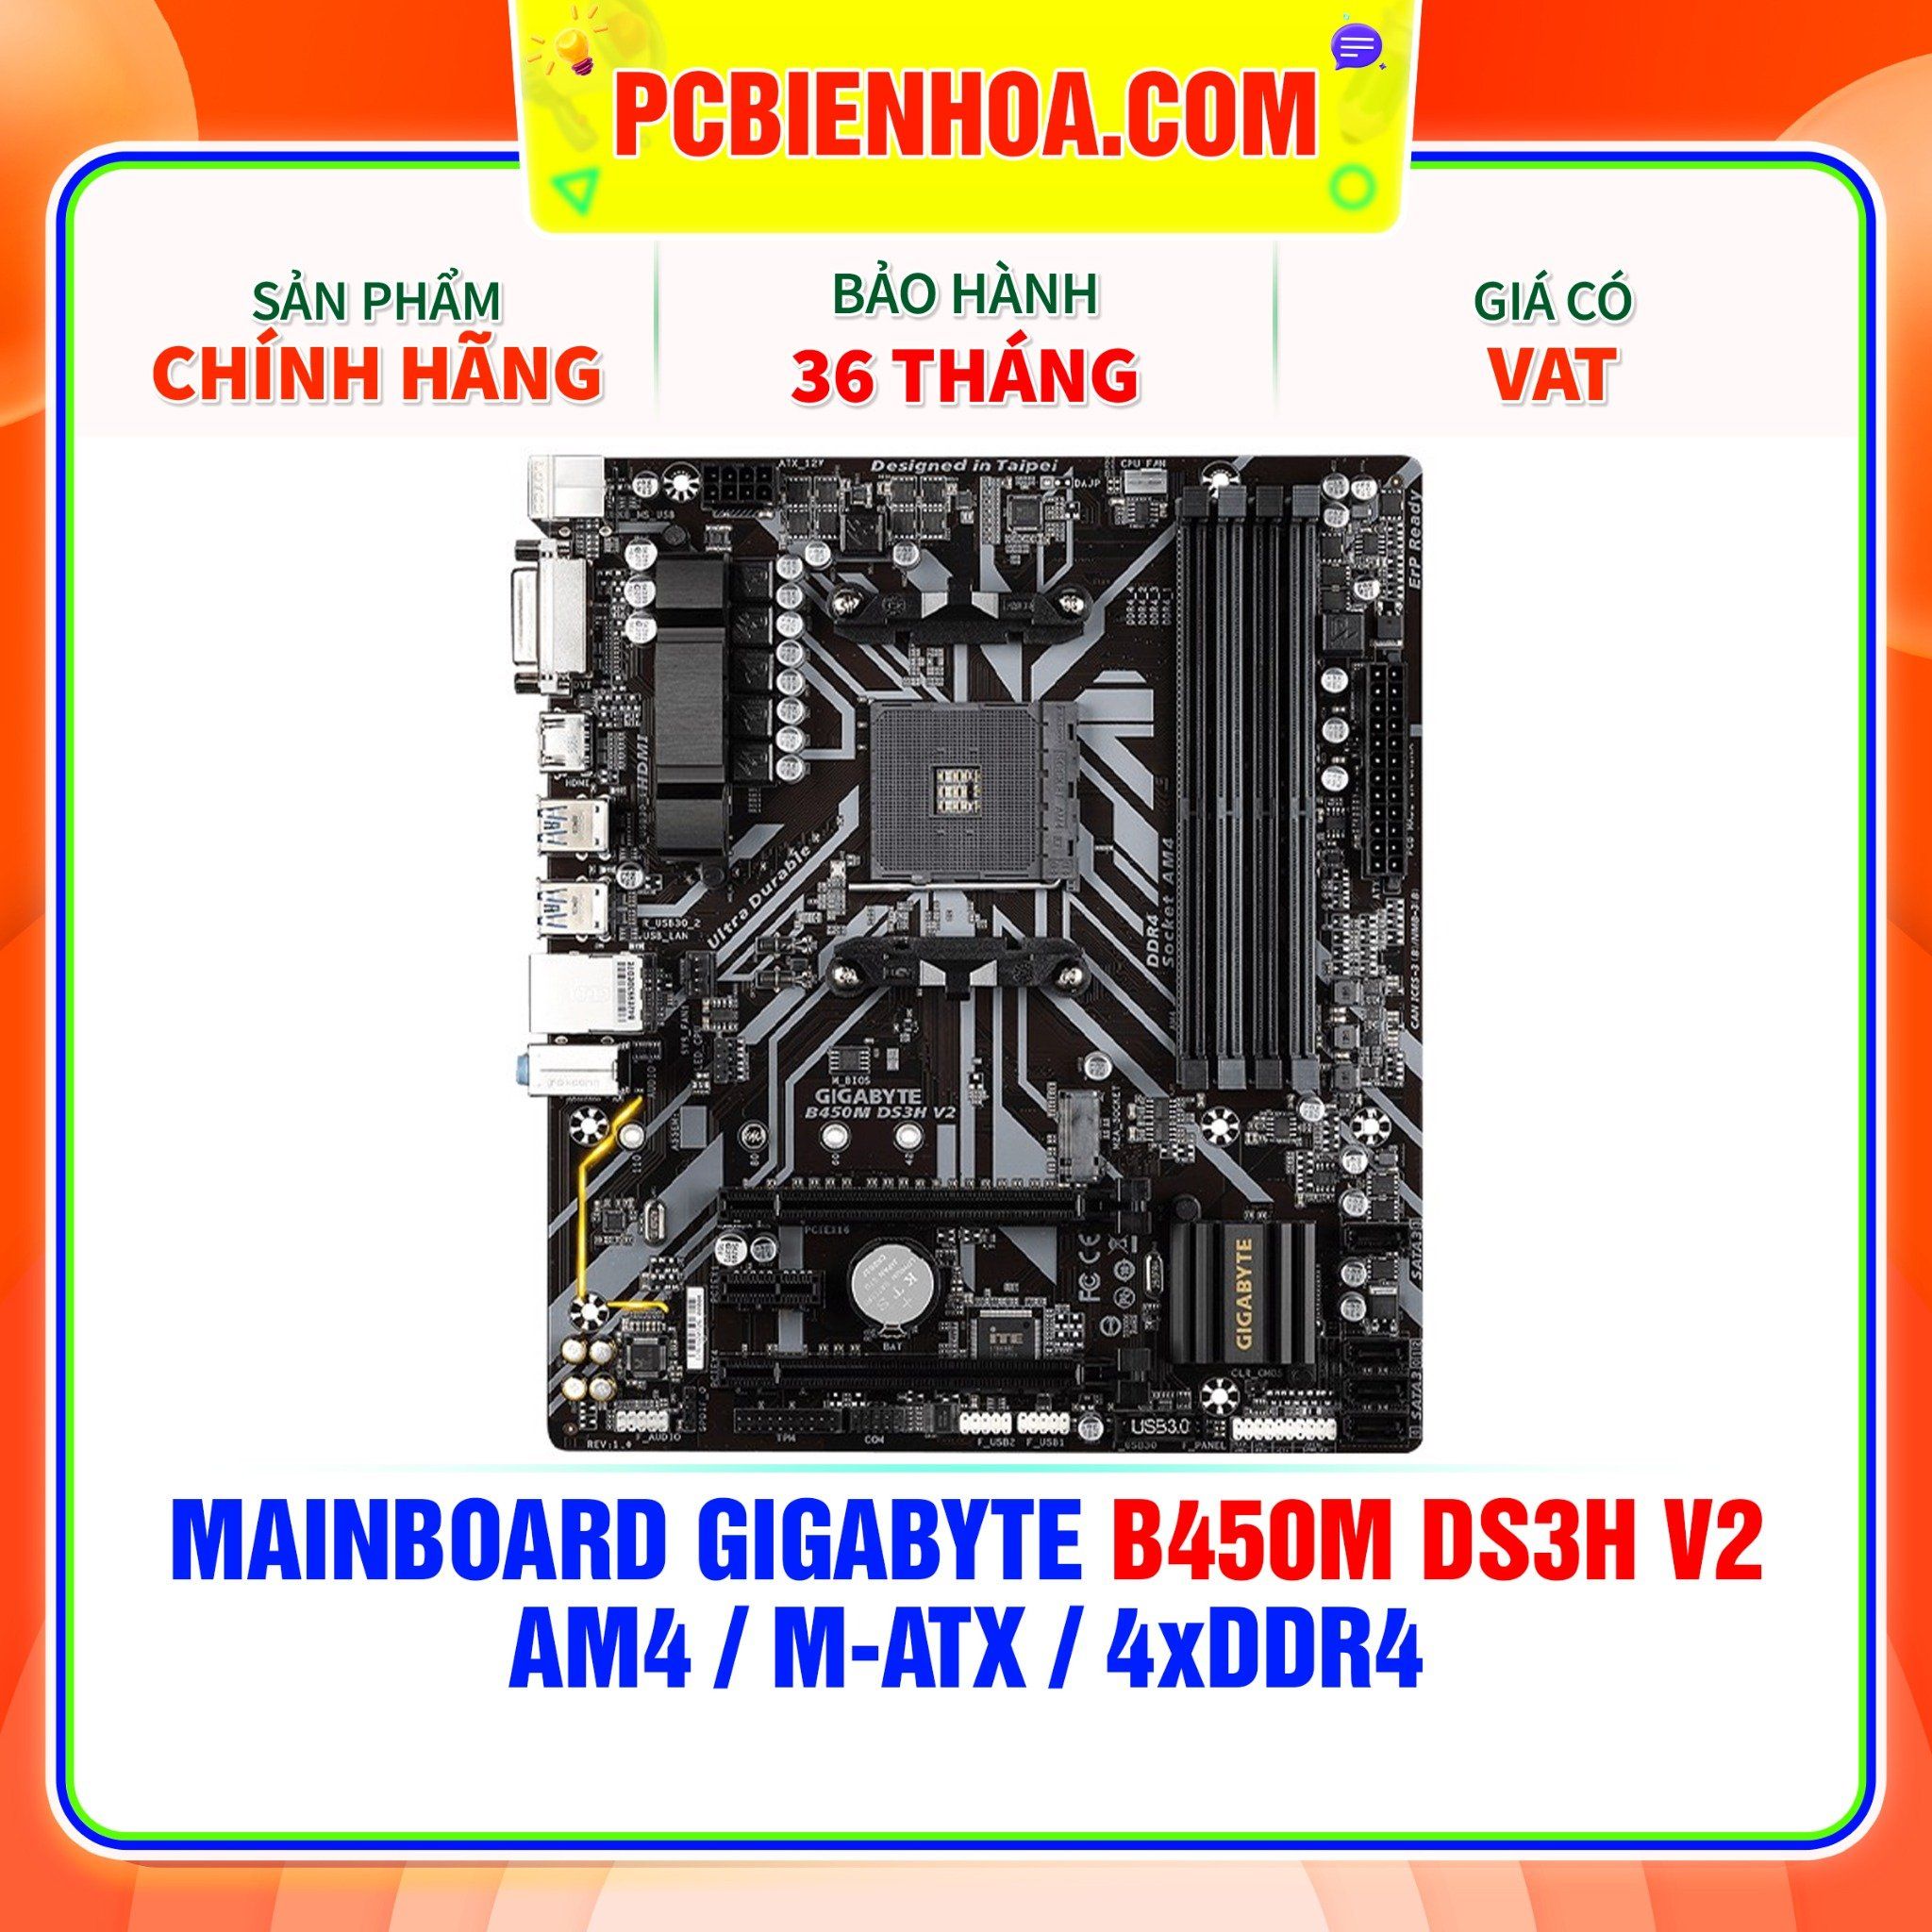  MAINBOARD GIGABYTE B450M DS3H V2 ( AM4 / m-ATX / 4xDDR4 ) 